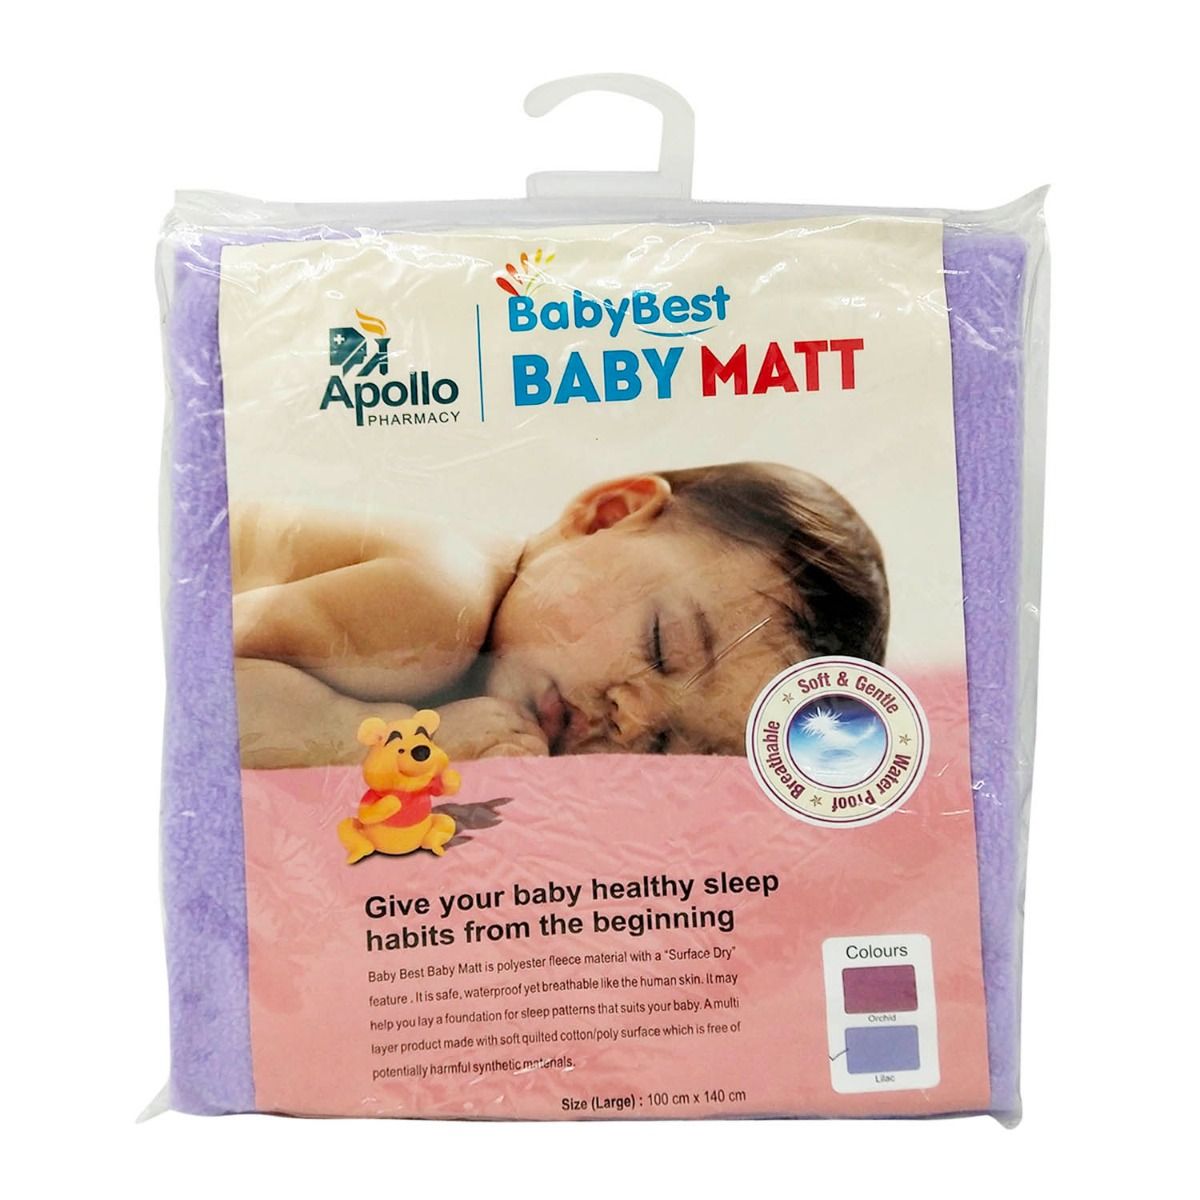 Buy Apollo Pharmacy BabyBest Baby Matt Lilac Large, 1 Count Online